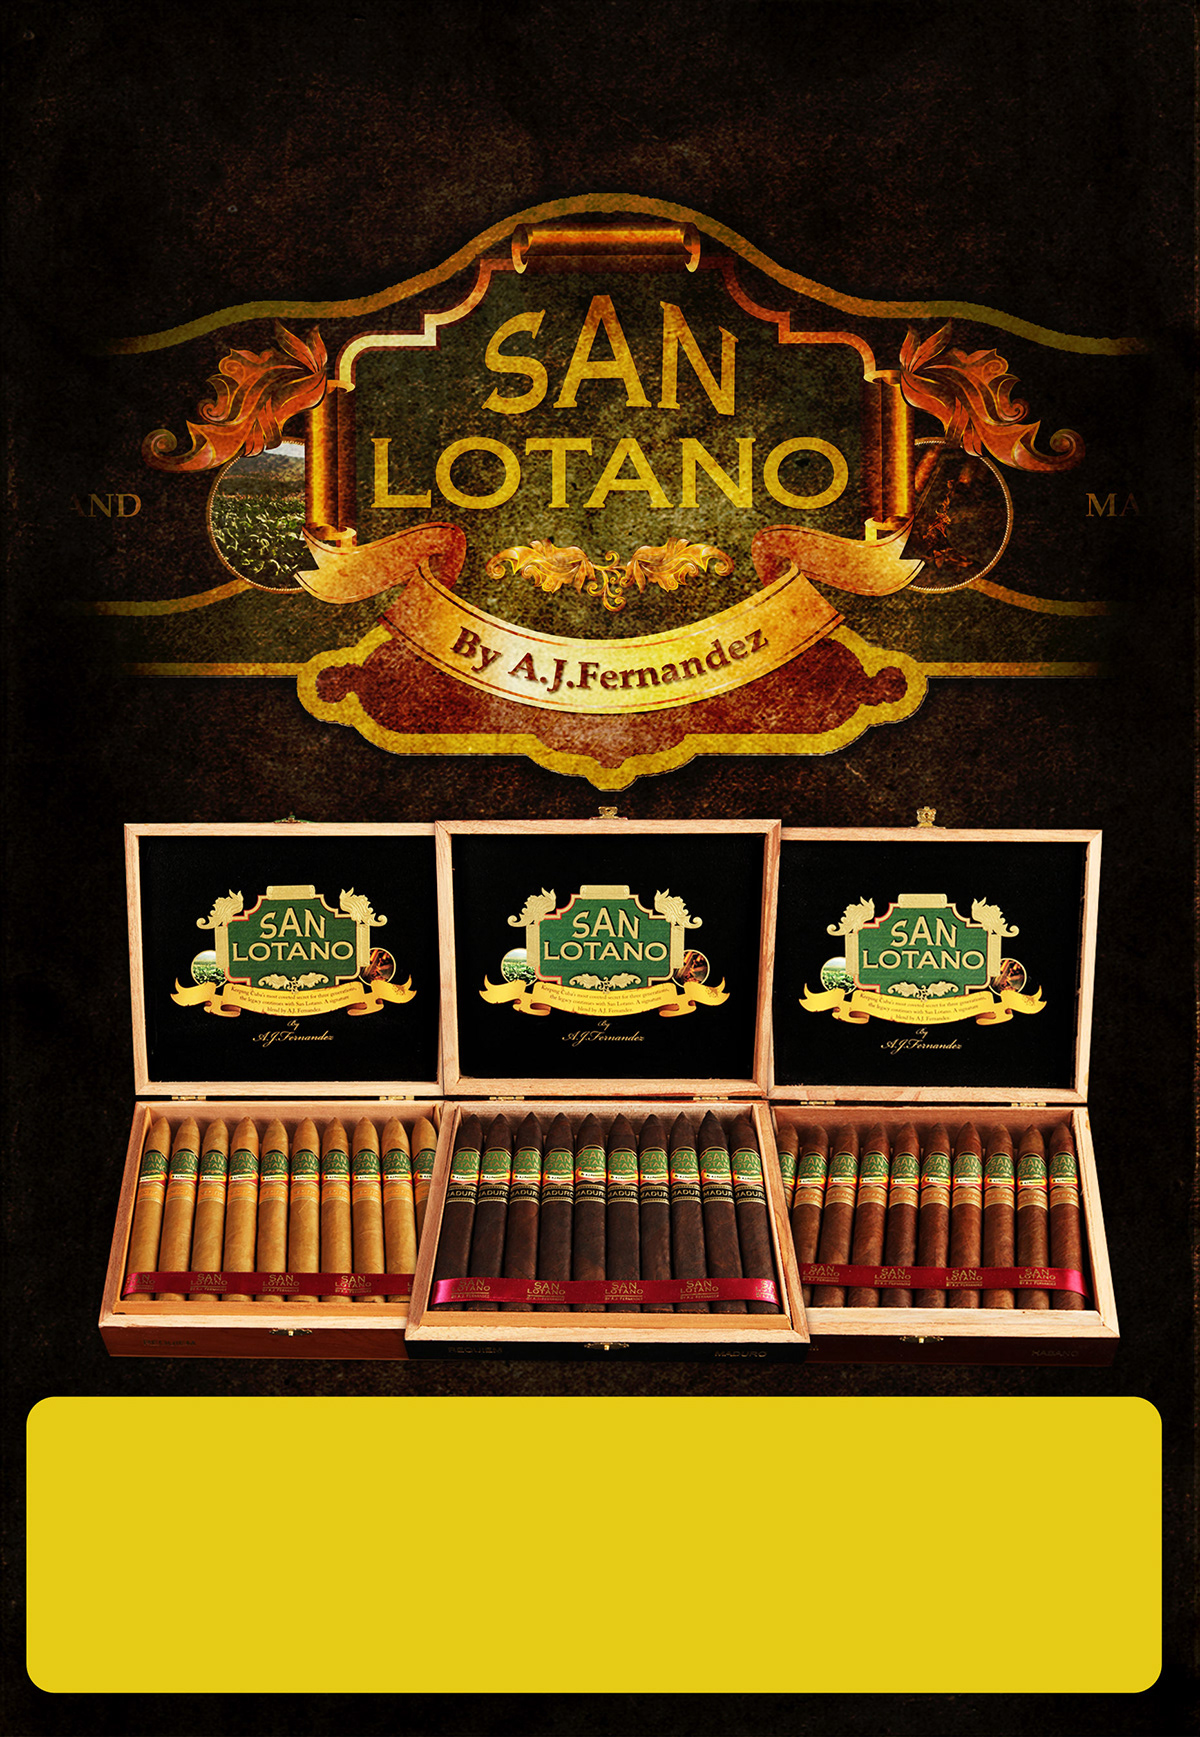 cigar cigars poster flyer ads aficionado